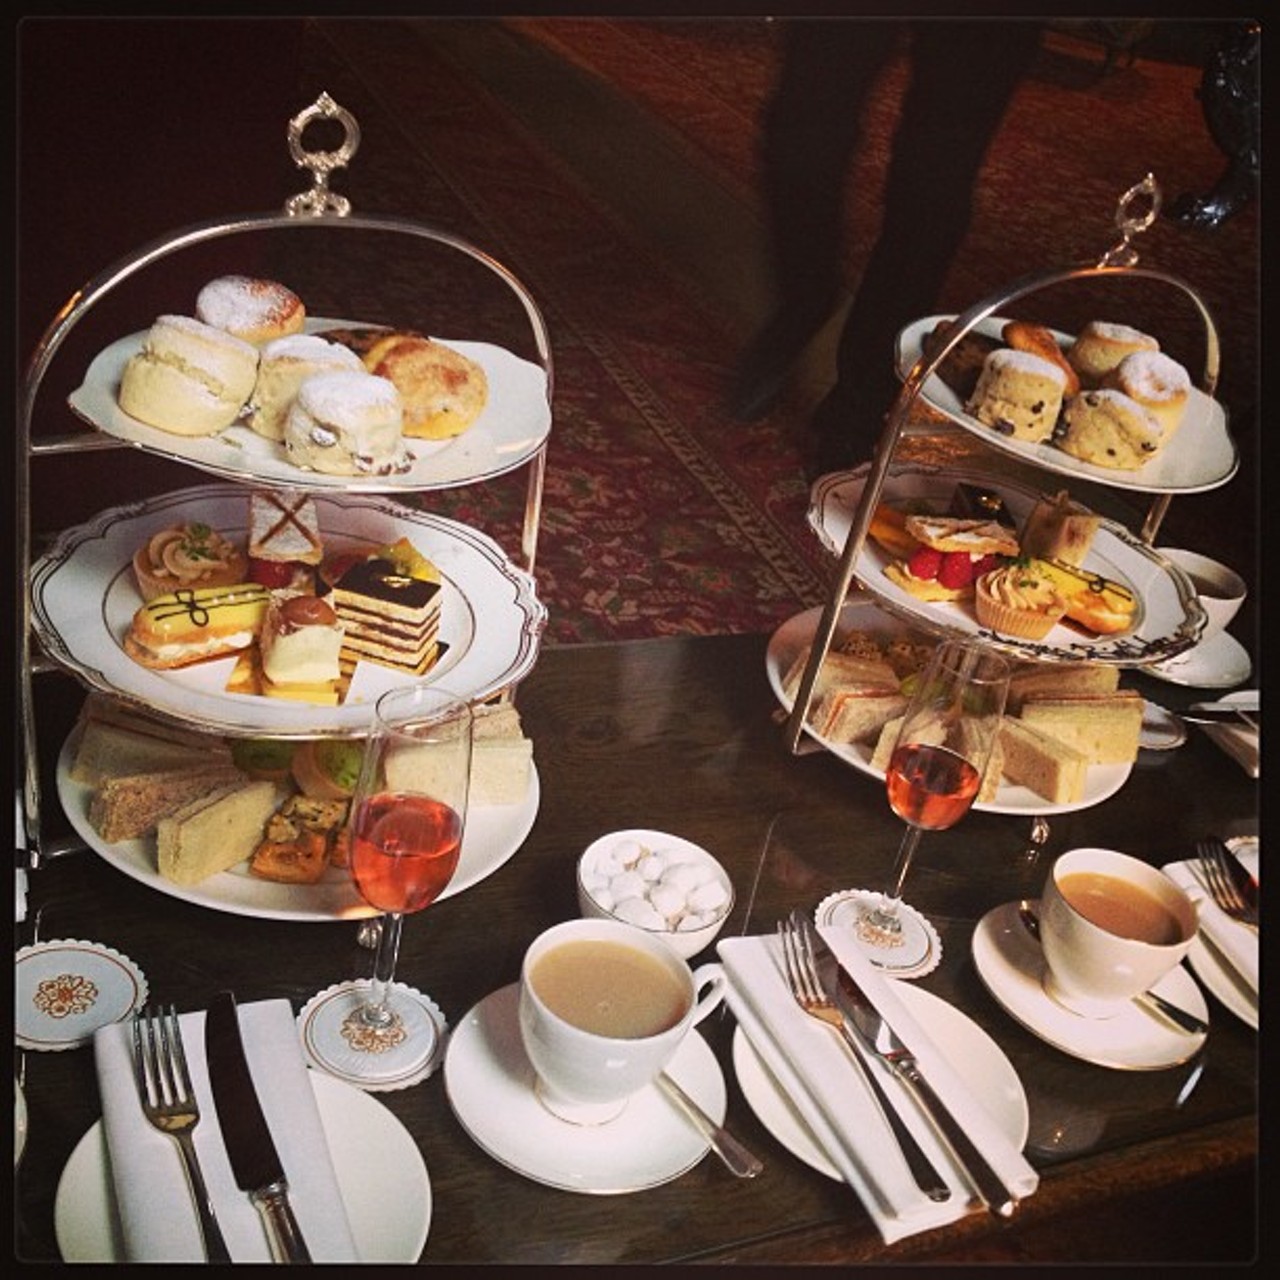 Afternoon tea #cleveland #hotel #afternoon #tea #birthday #marlow